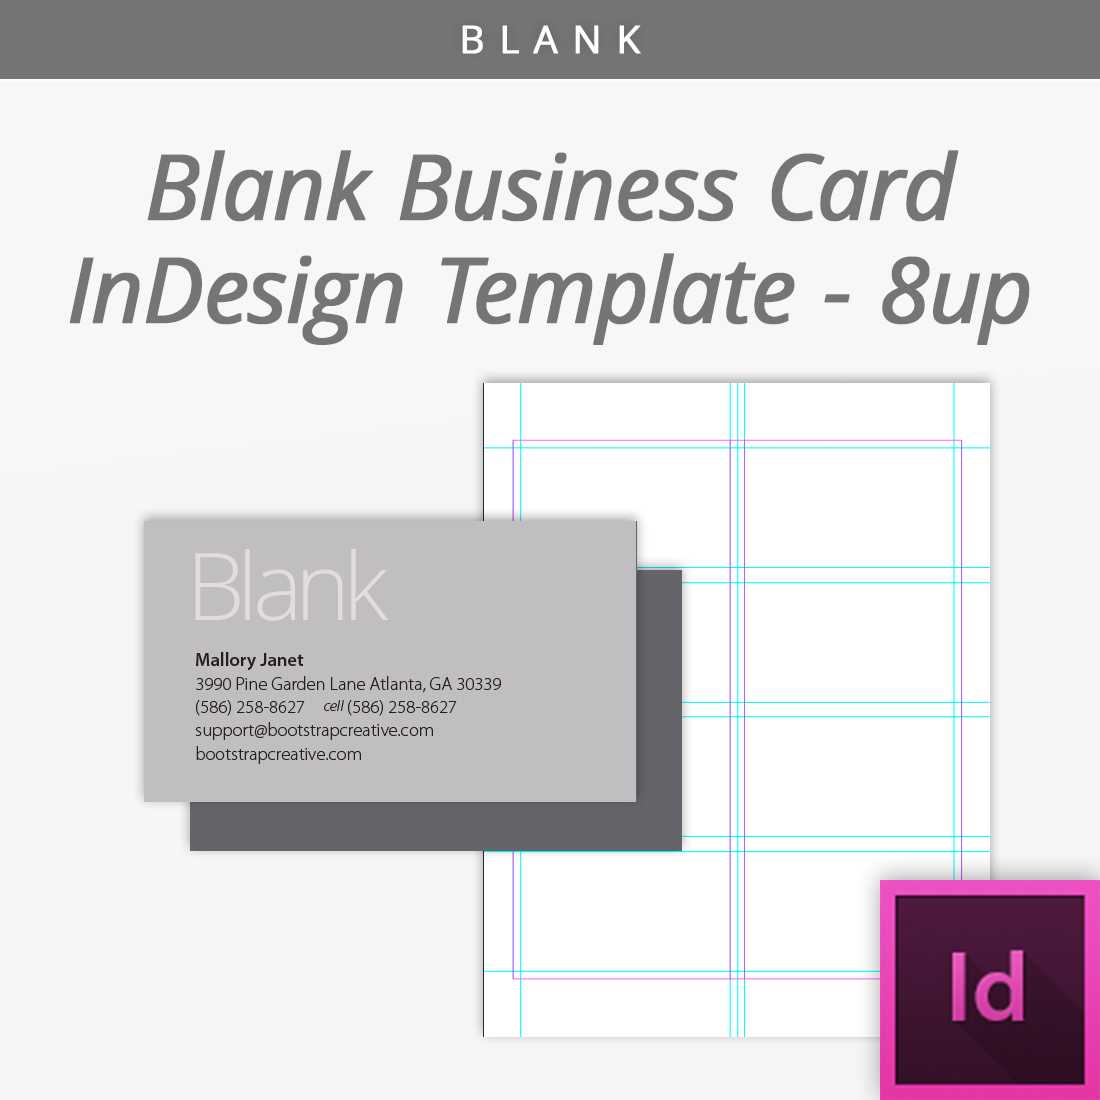 Blank Indesign Business Cards Template 8 Up Regarding Plain Business Card Template